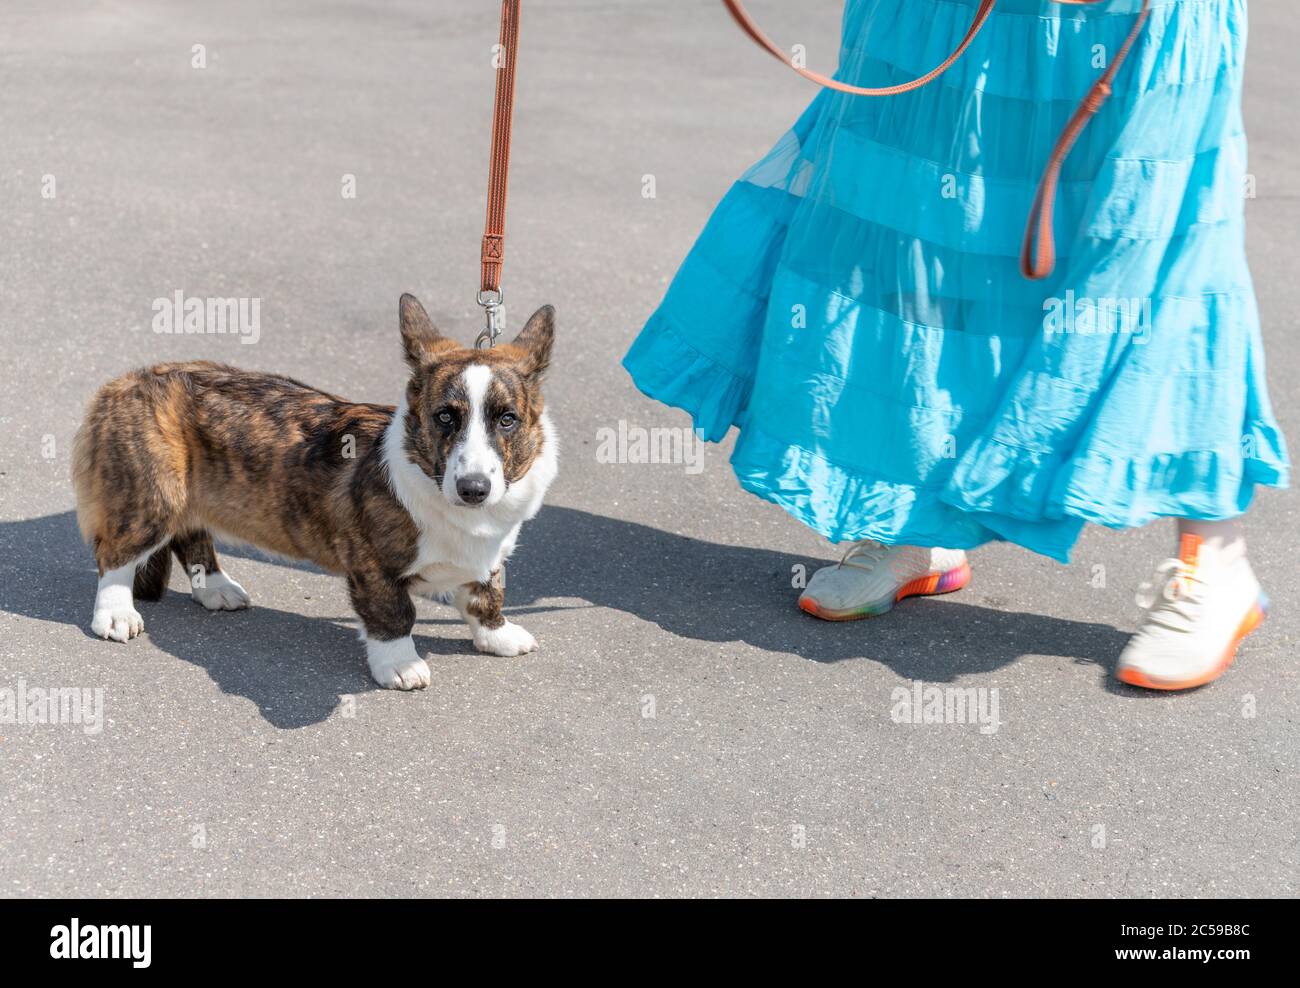 The Woman walking Welsh Corgi cardigan dog Stock Photo